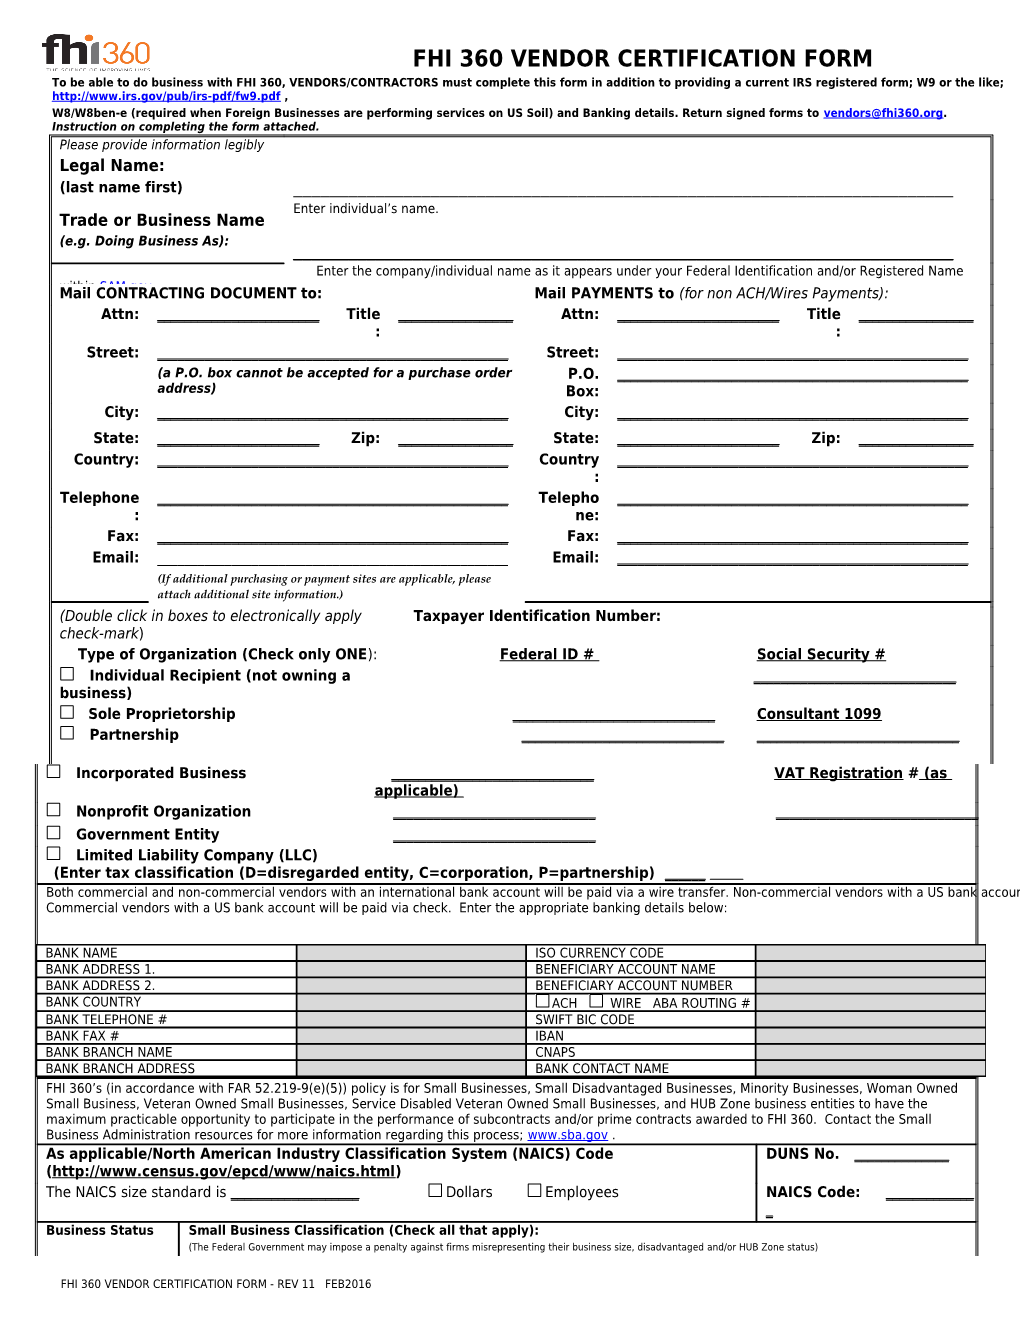 Supplier Certification Form